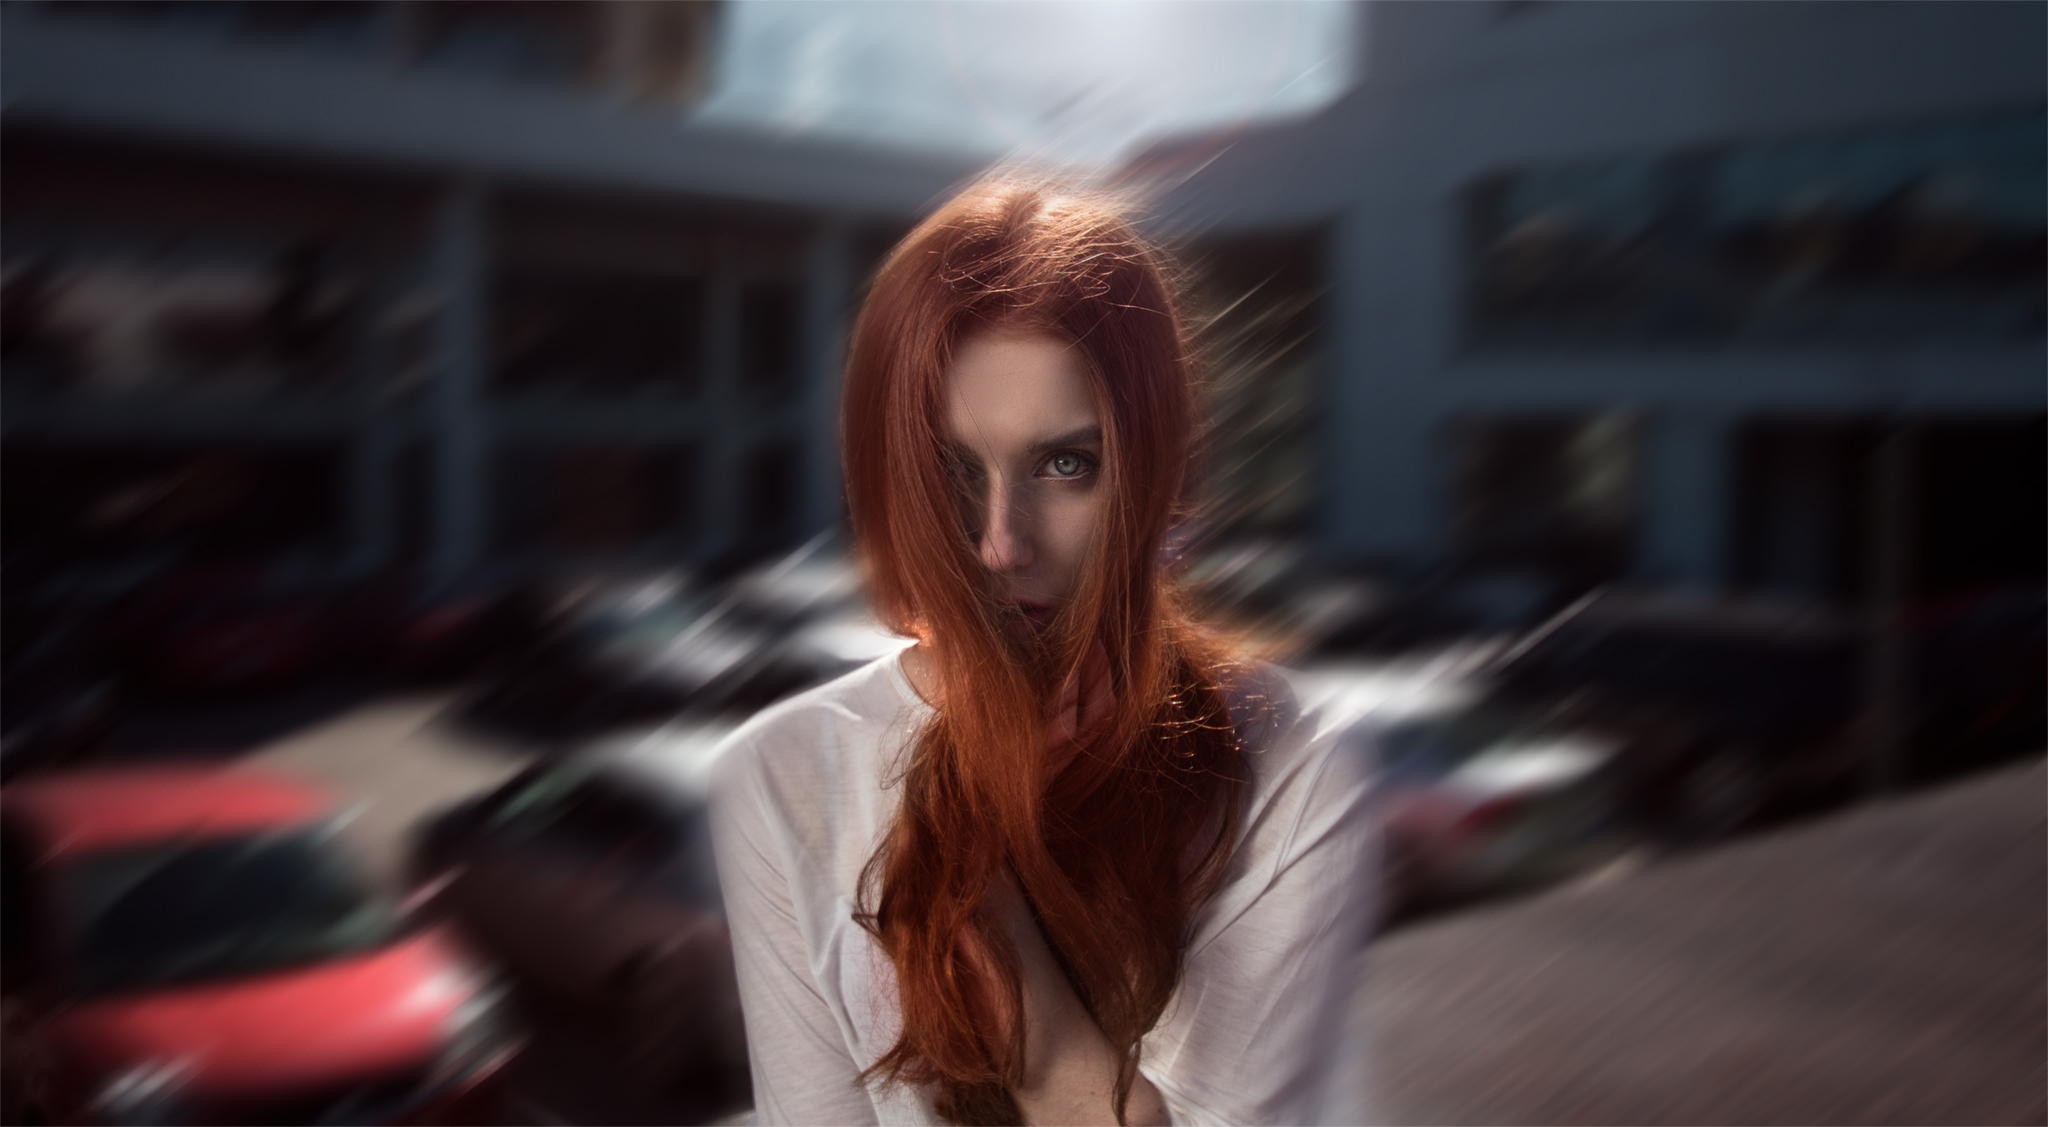 People 2048x1127 women face portrait redhead motion blur model hair in face dyed hair long hair women outdoors urban